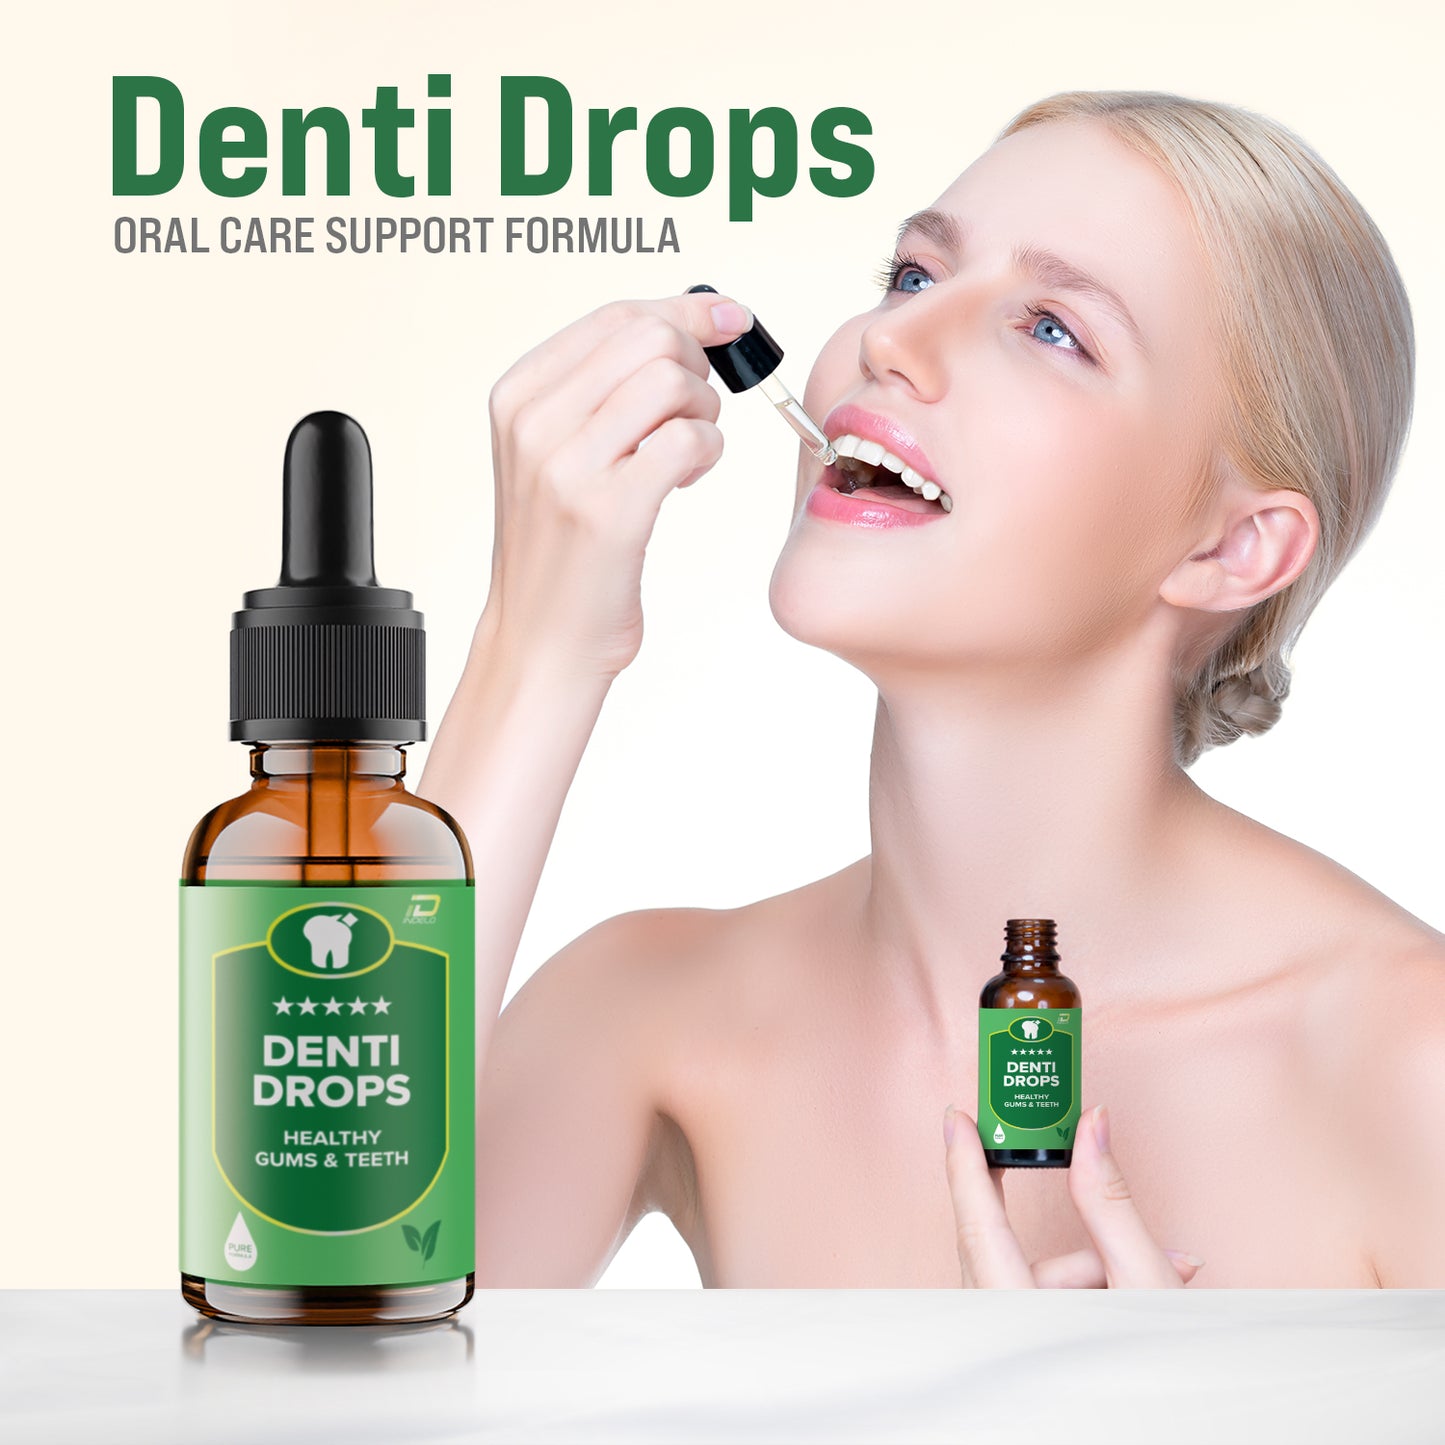 DentiDrops | Dental Drops For Healthy Gums